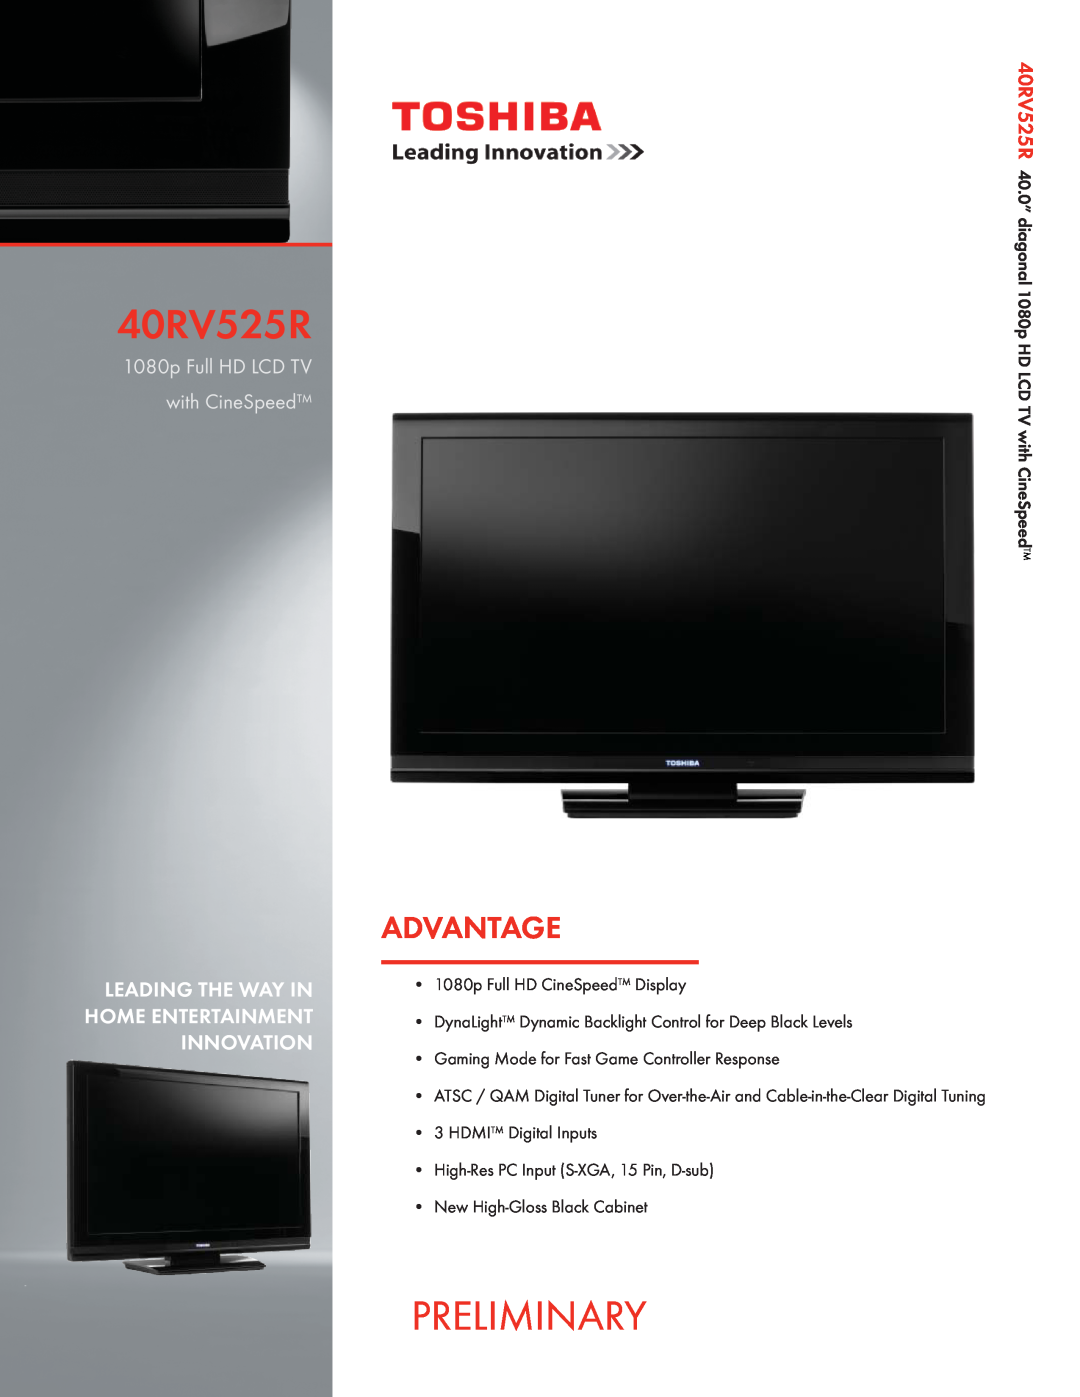 Toshiba 40RV525R manual Preliminary, Advantage, 1080p Full HD LCD TV with CineSpeed 